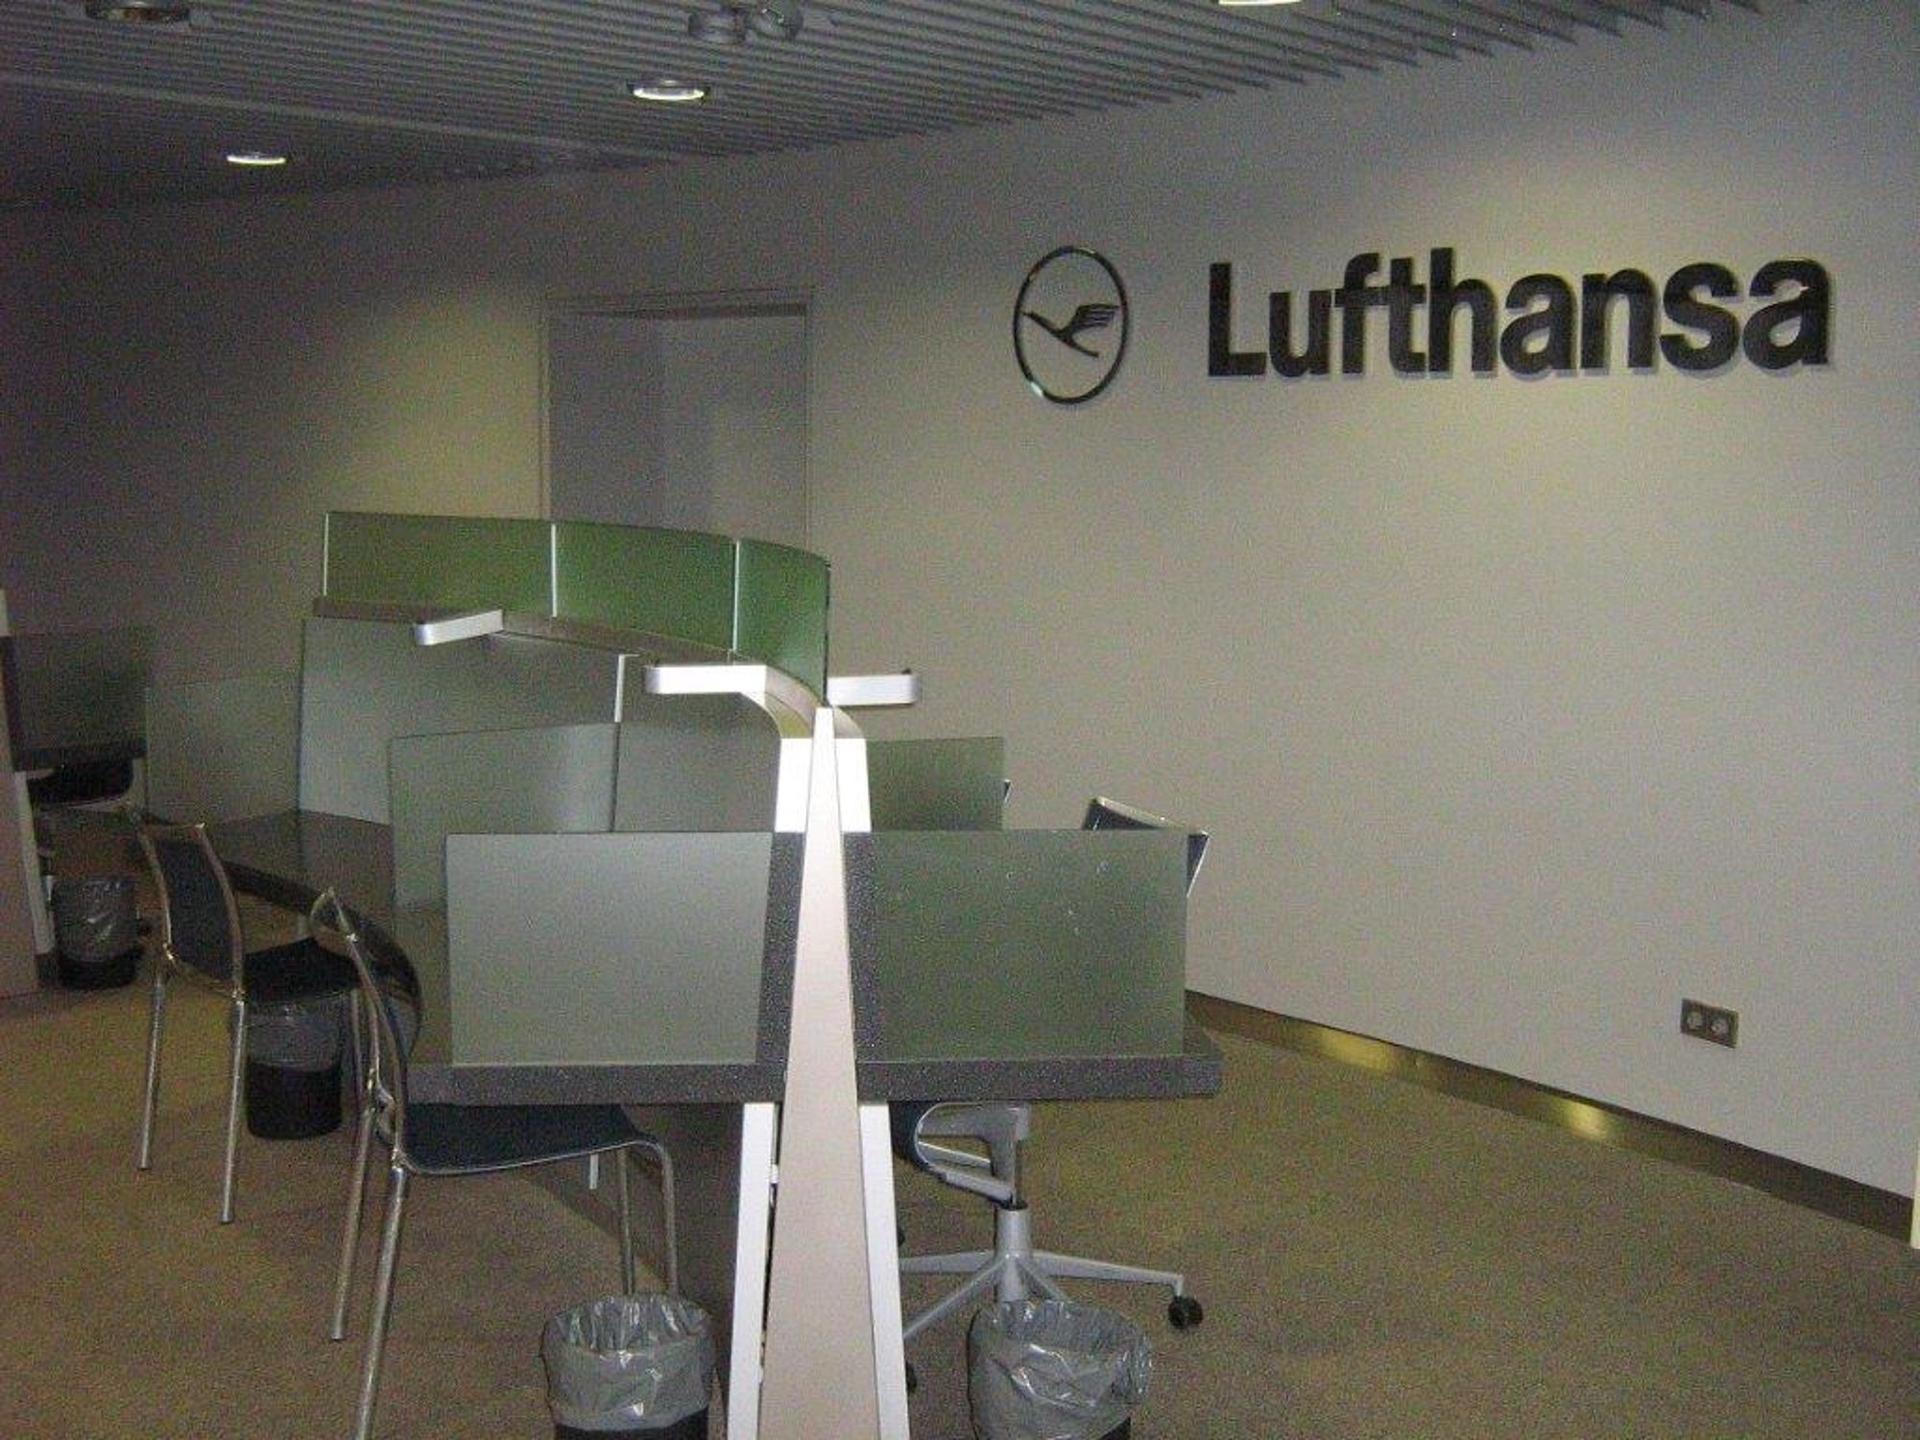 Lufthansa Business Lounge image 11 of 22